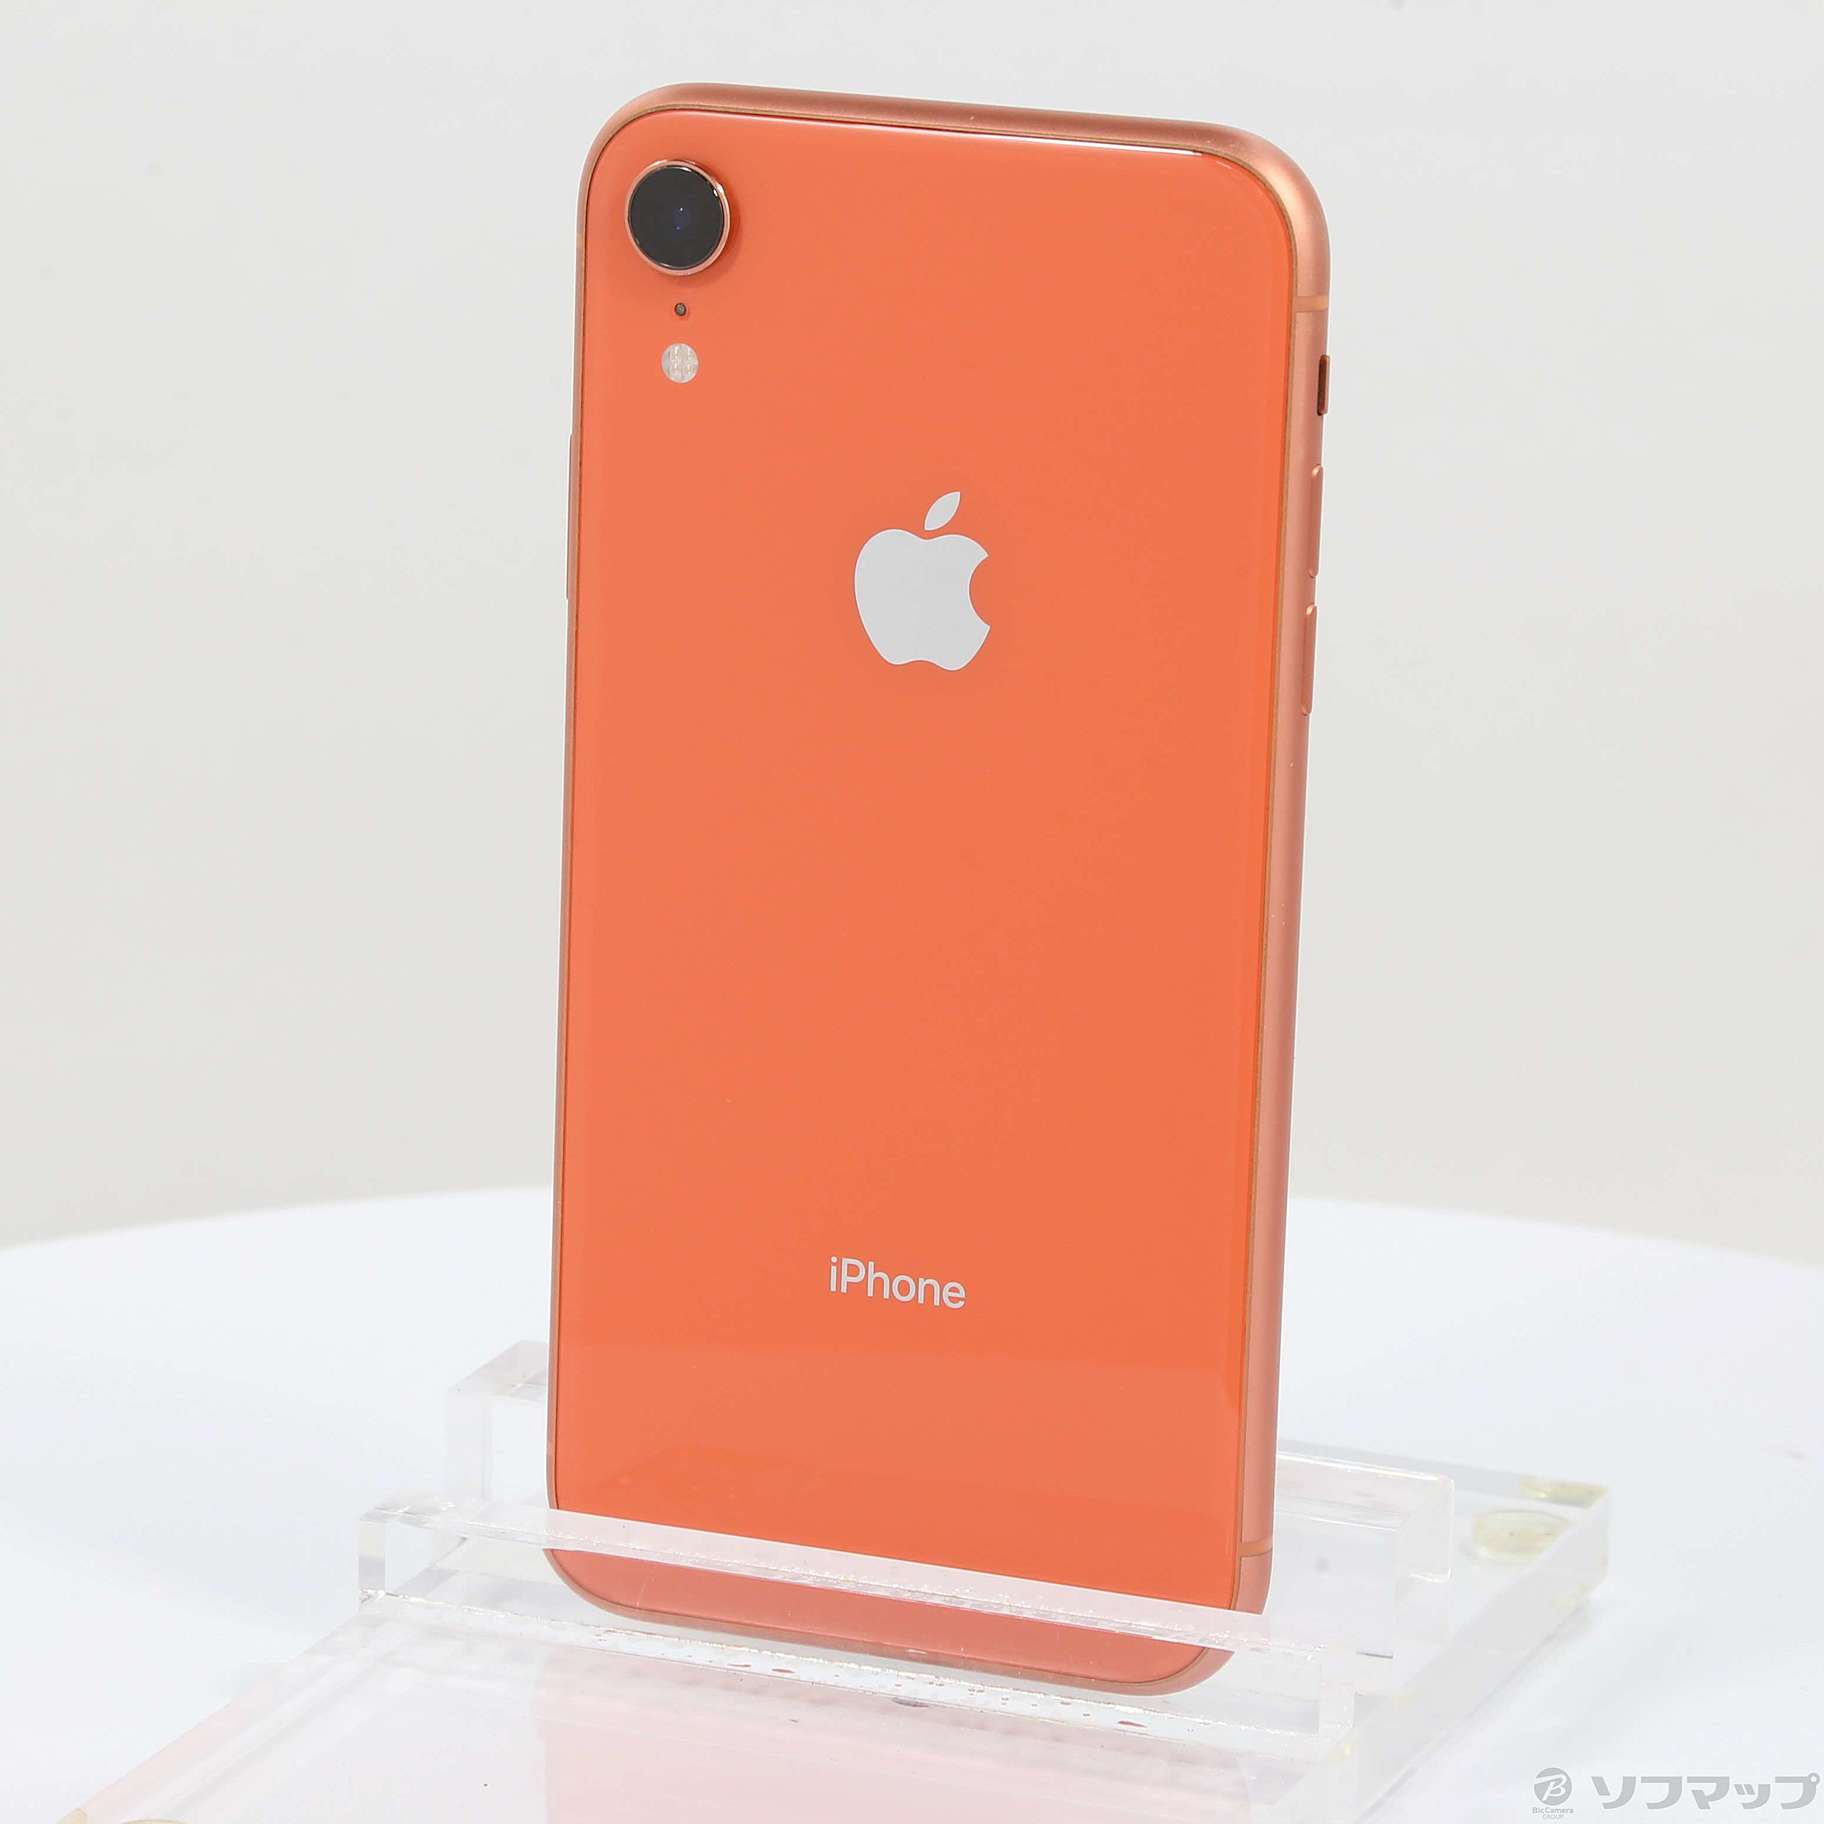 iPhone XR Coral 256 GB SIMフリー - スマートフォン本体